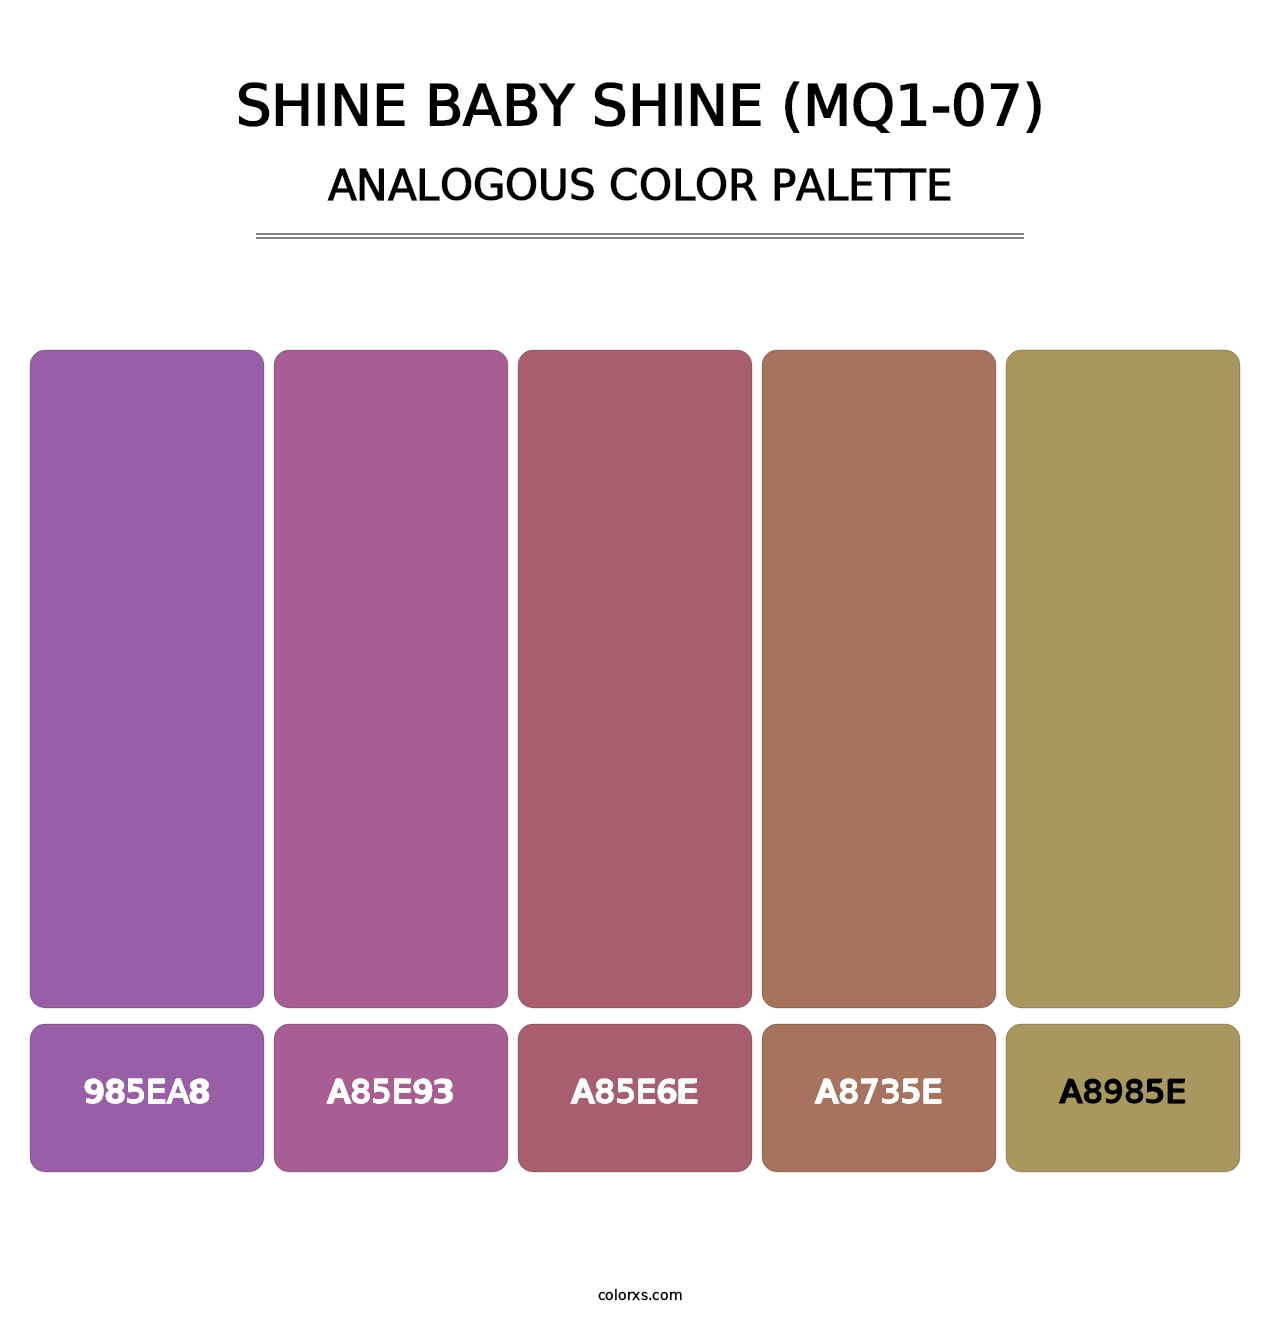 Shine Baby Shine (MQ1-07) - Analogous Color Palette